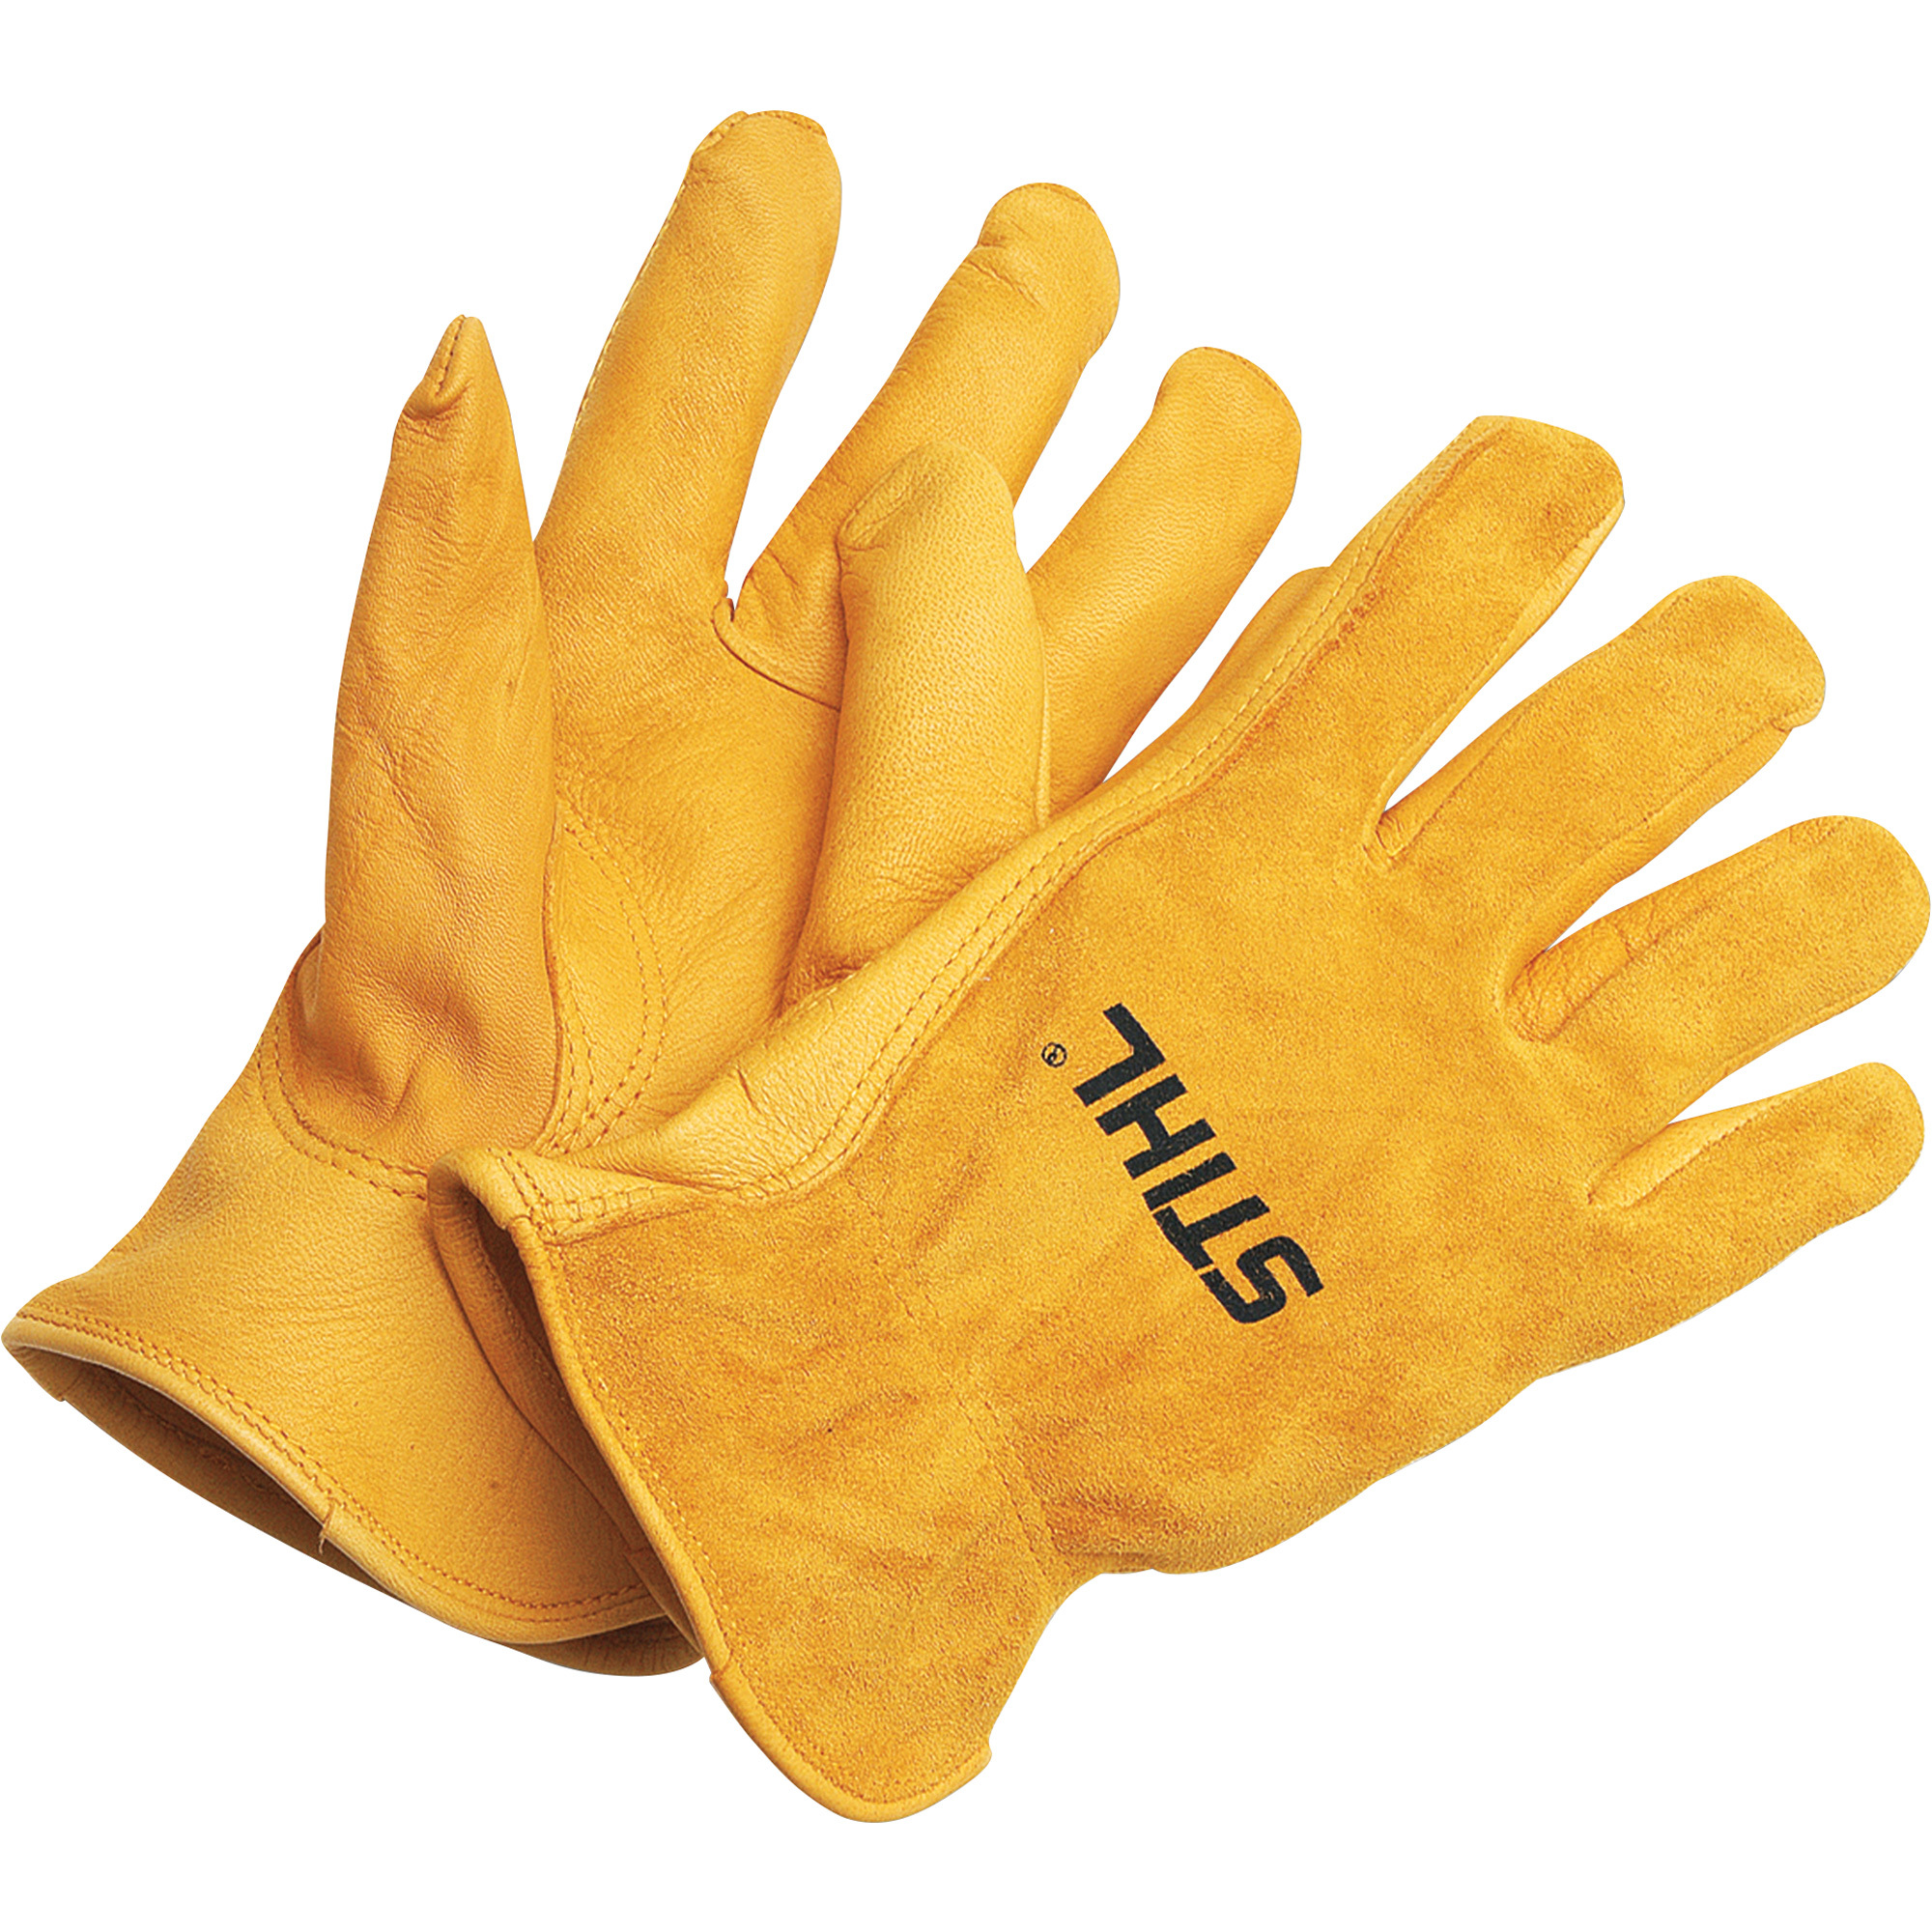 STIHL Leather Landscaper Series Gloves, Tan, Medium, Model 0000 886 1104